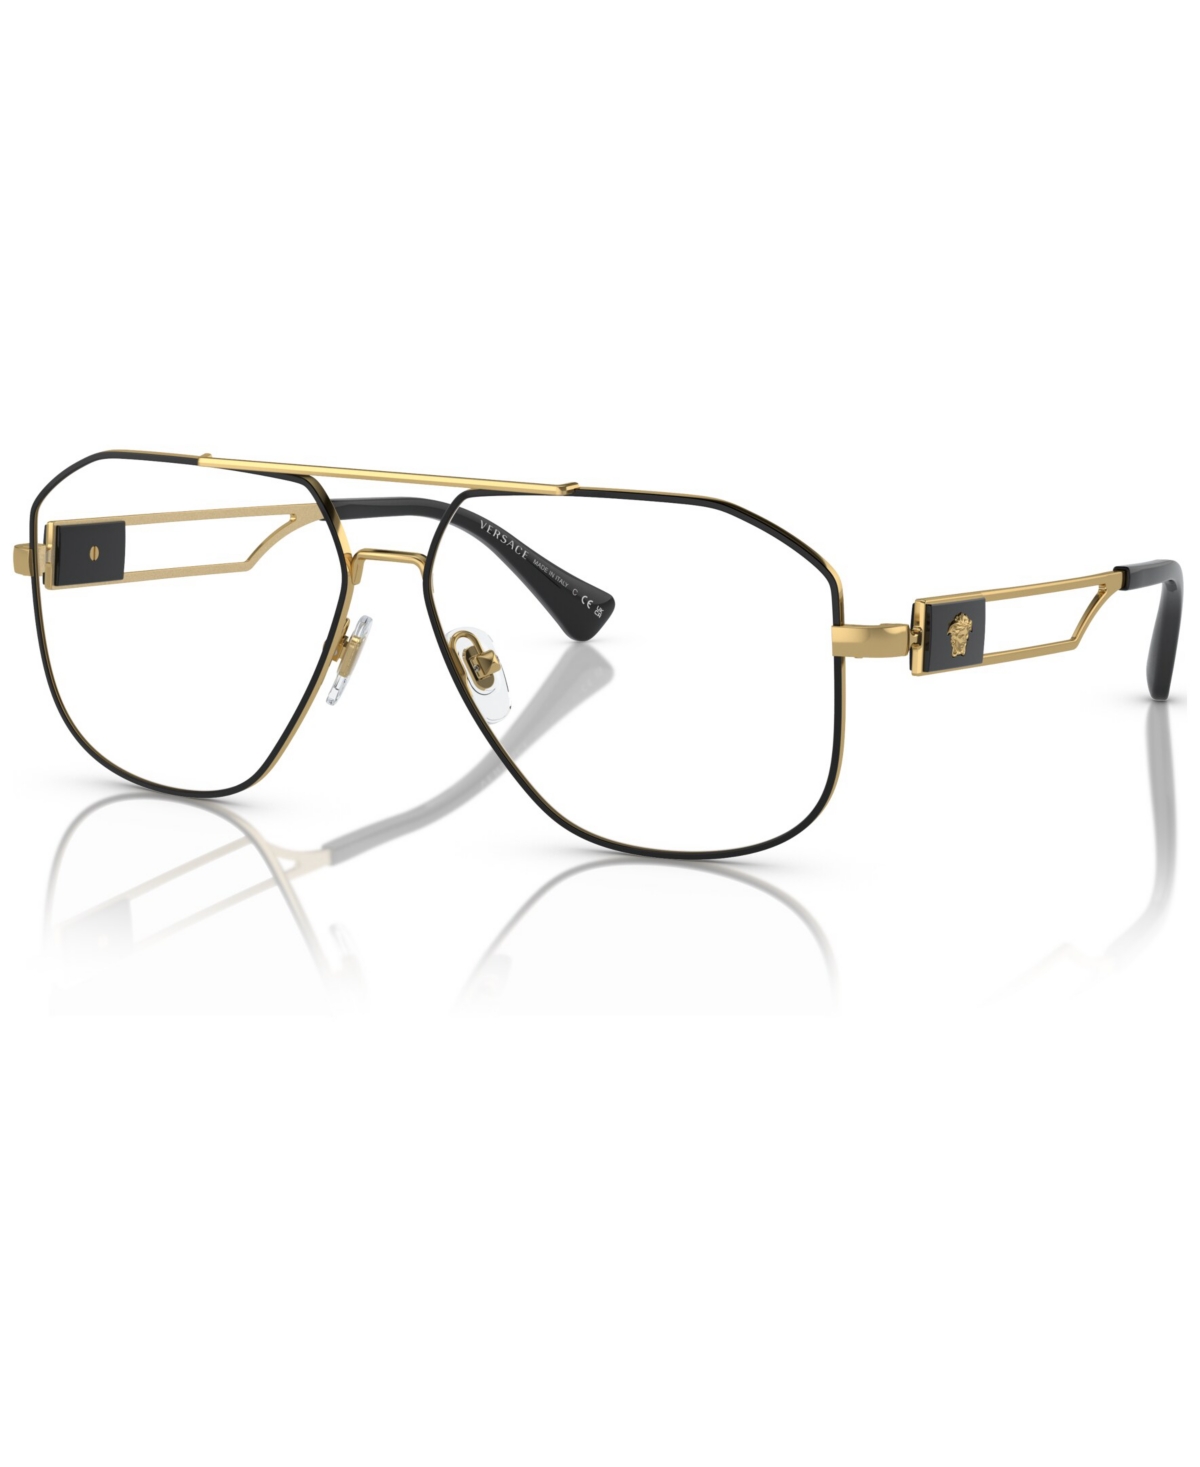 Men's Pilot Eyeglasses, VE1287 57 - Black, Gold-Tone